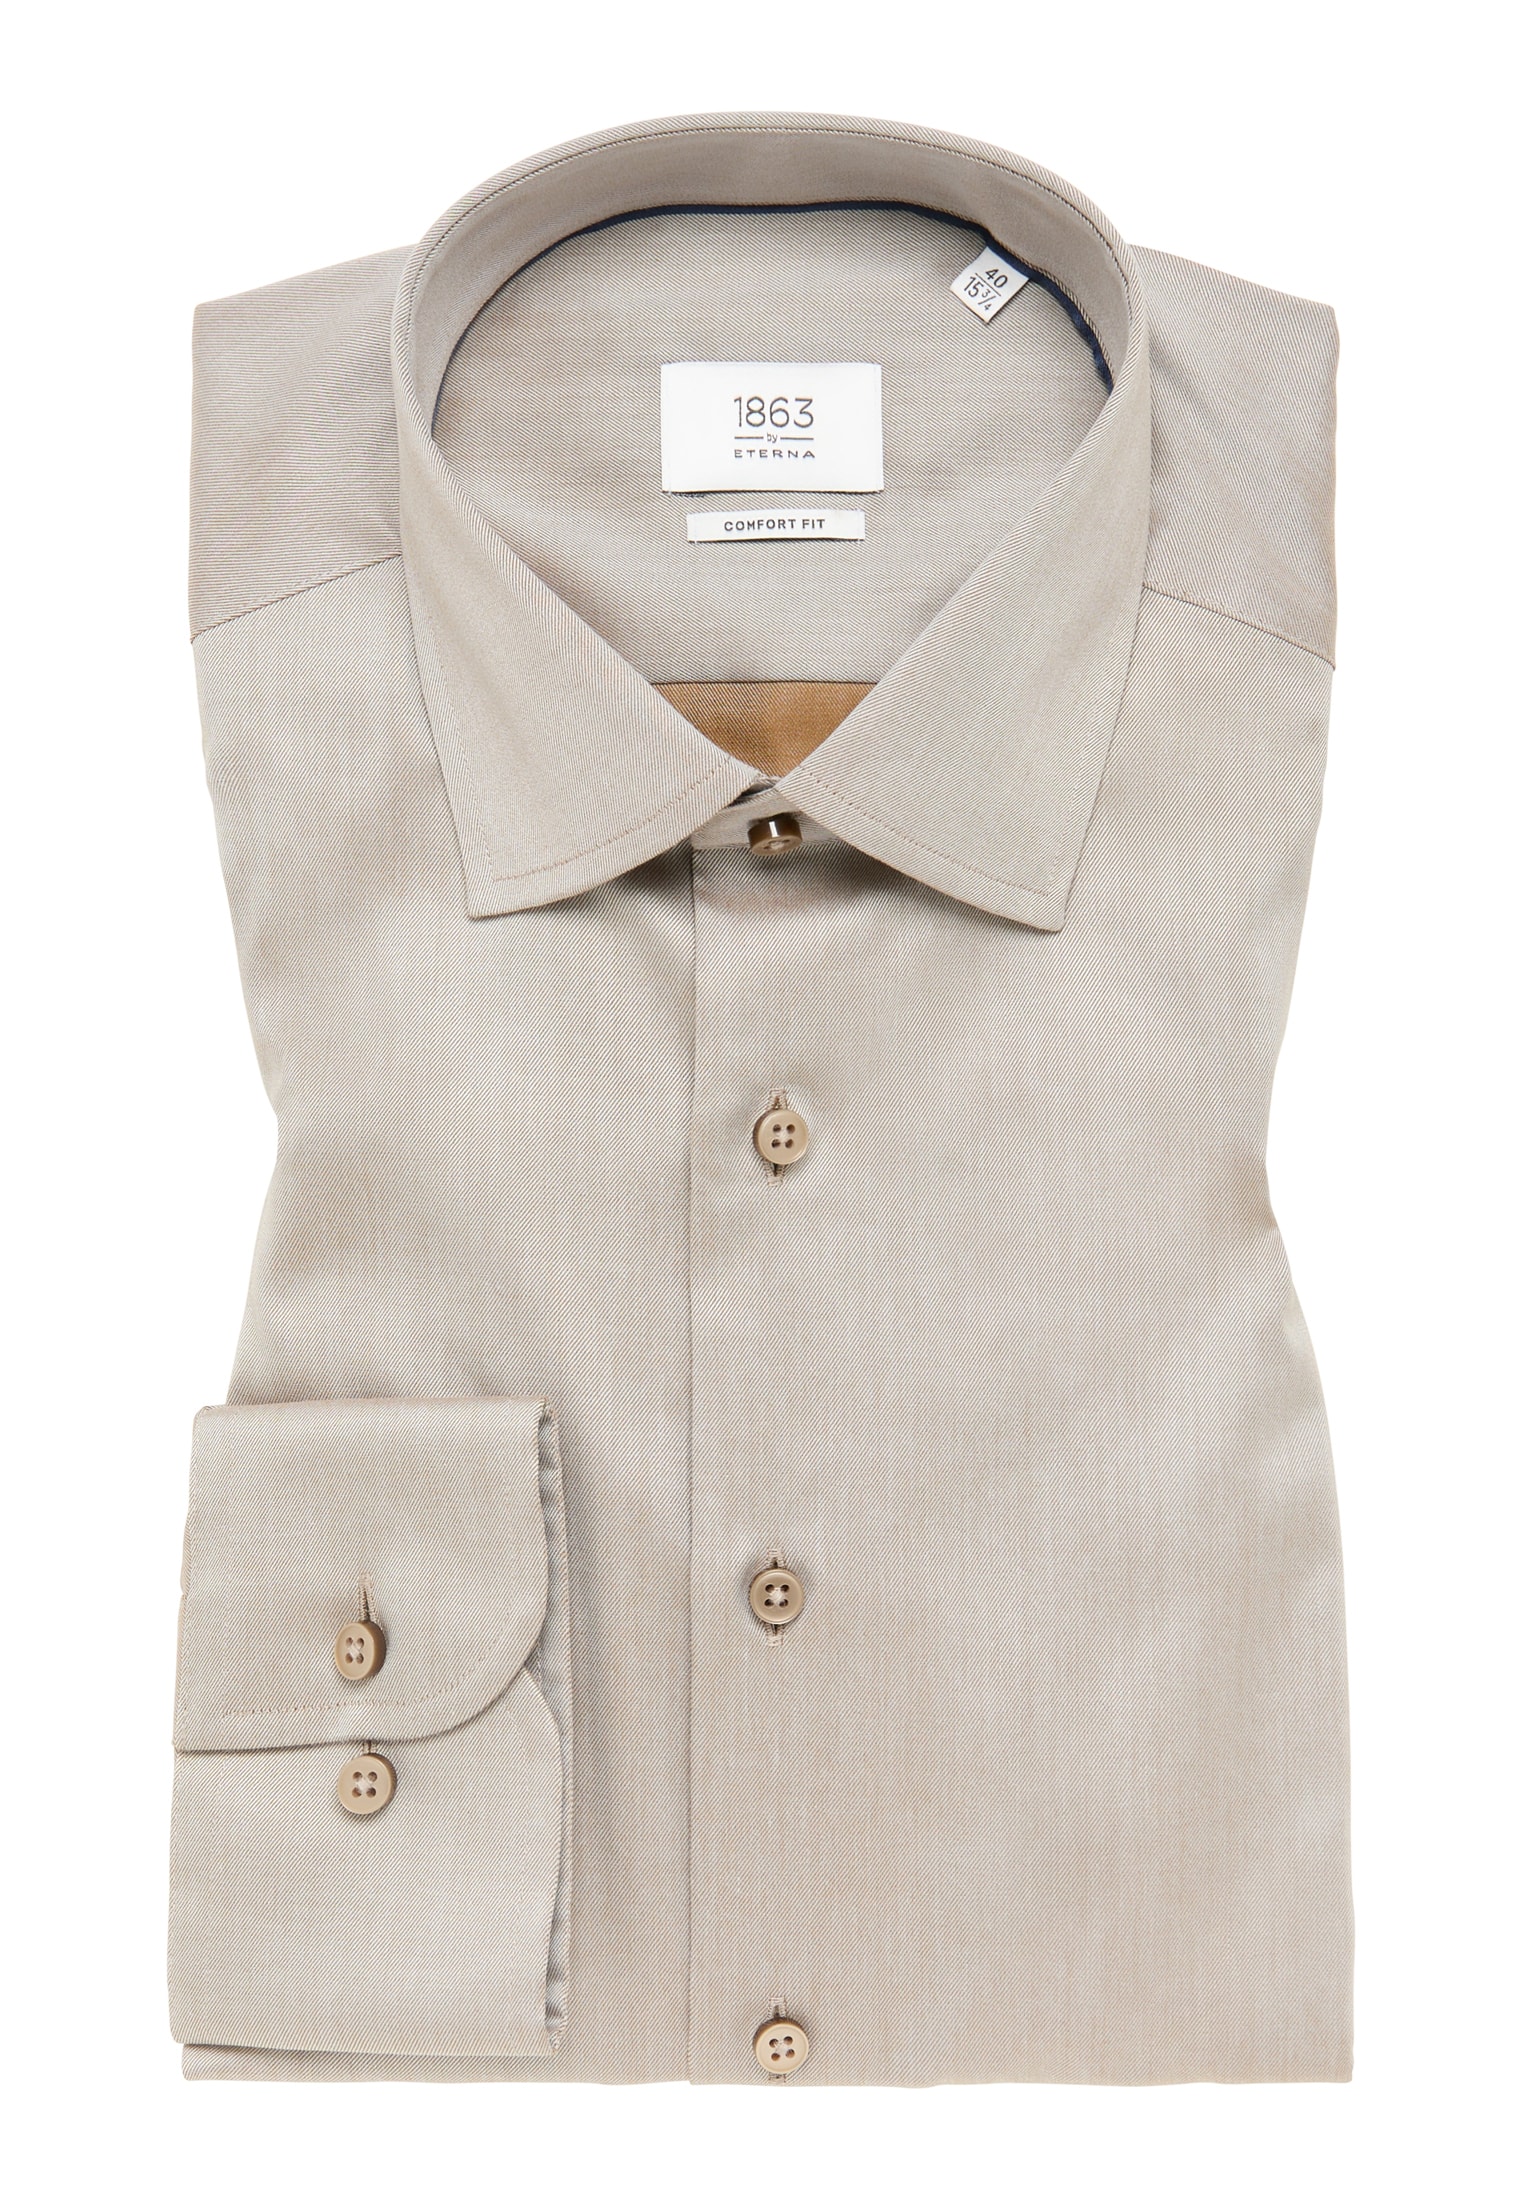 COMFORT FIT Luxury Shirt in taupe unifarben | taupe | 54 | Langarm |  1SH04924-02-71-54-1/1